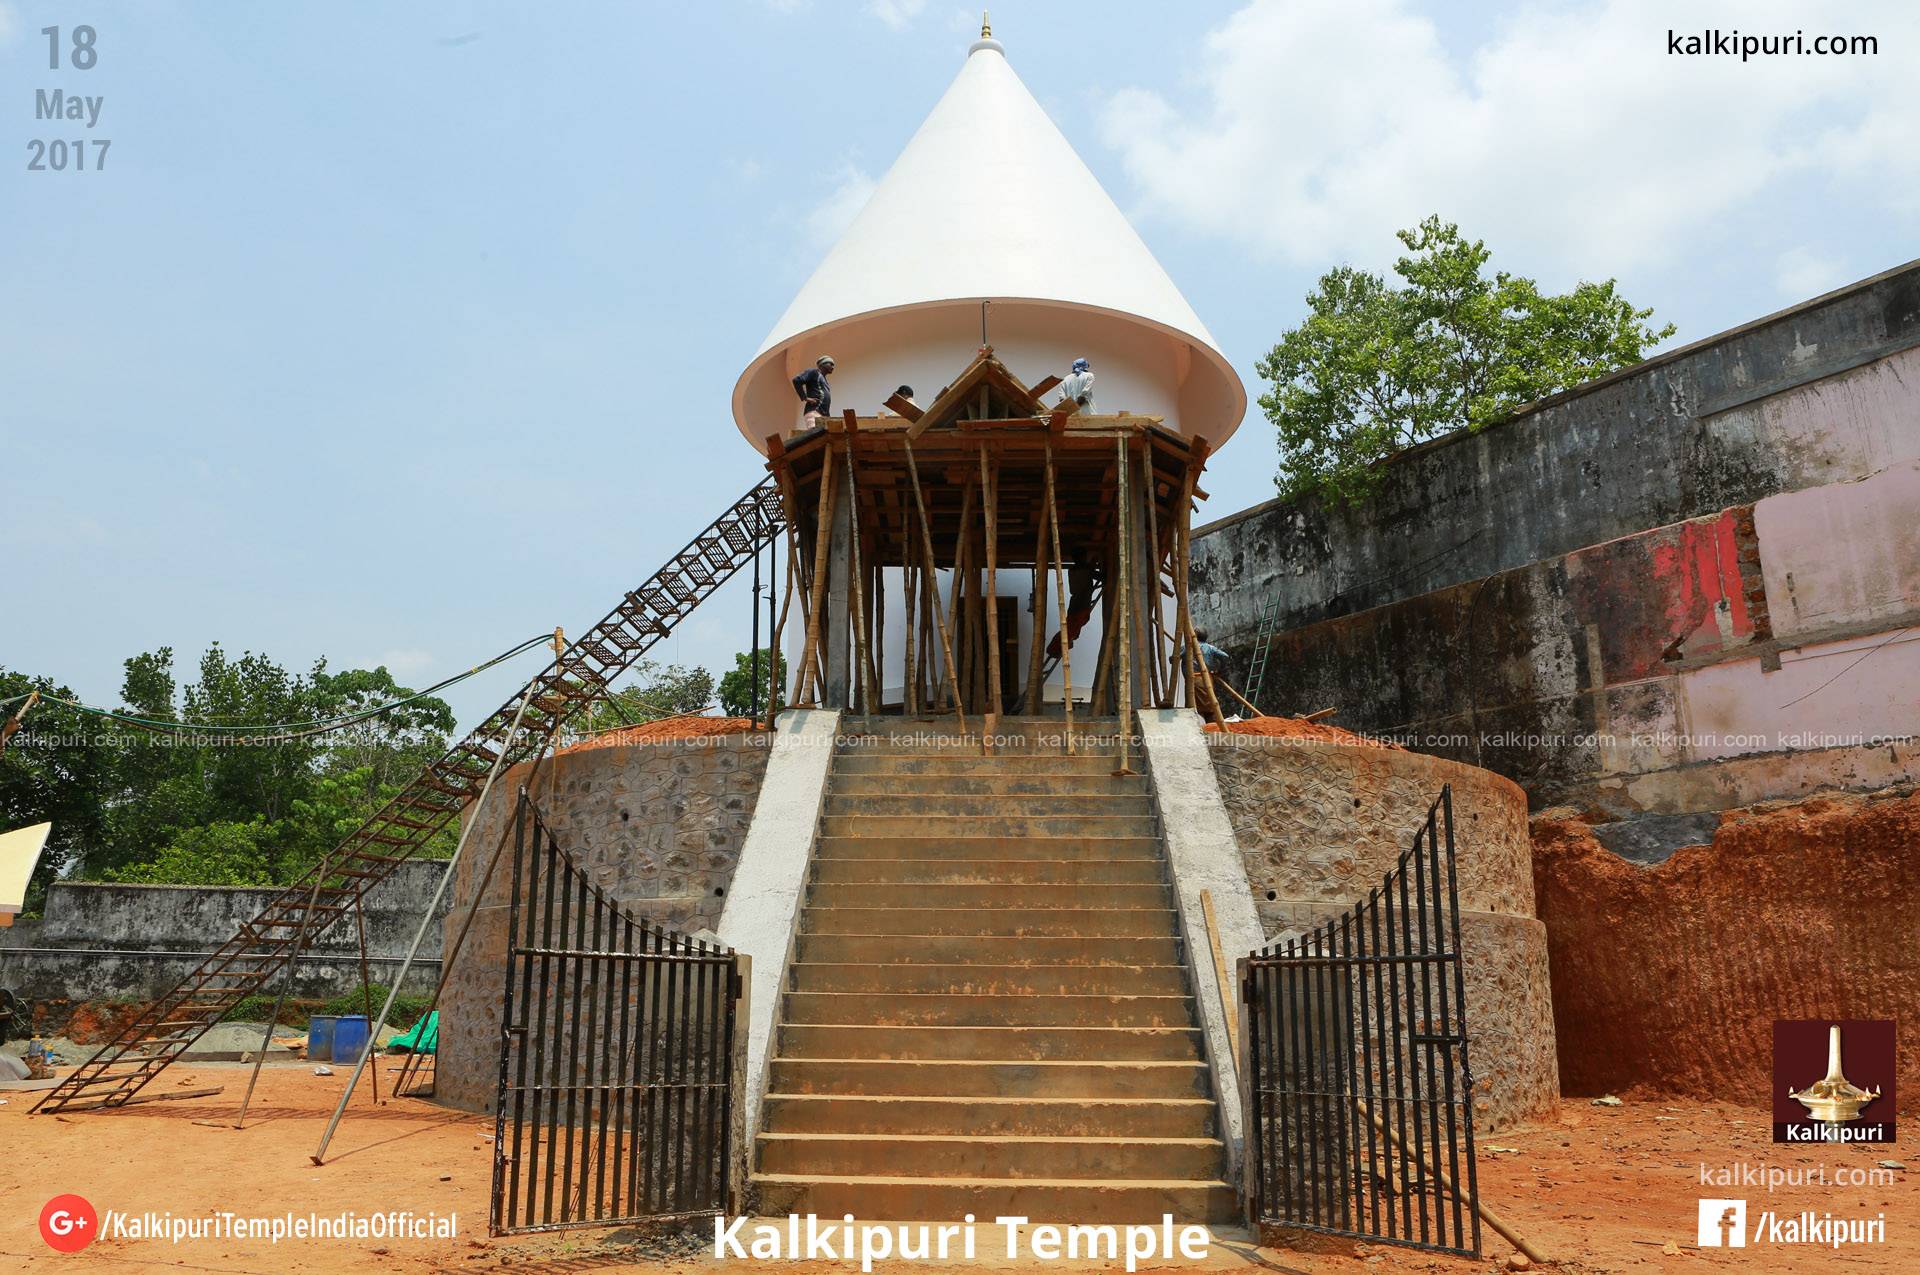 Kalkipuri Temple on 18 May 2017